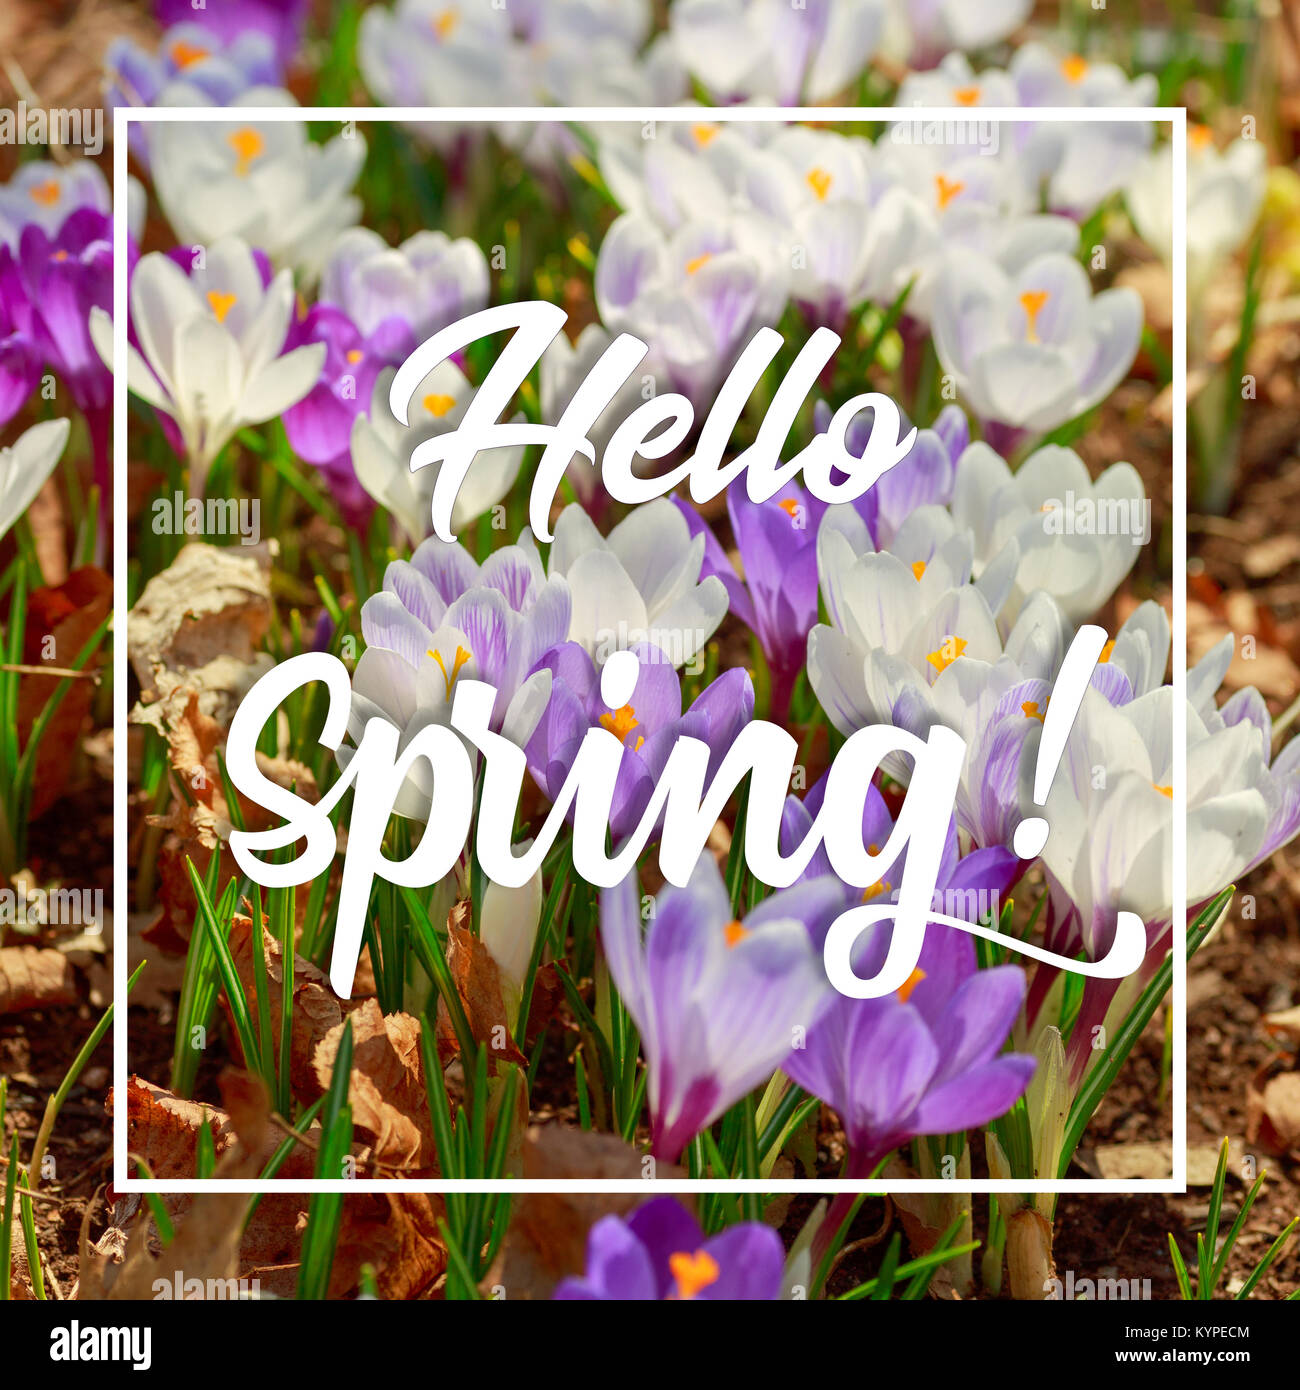 Springtime quote with flowering crocus. Stock Photo